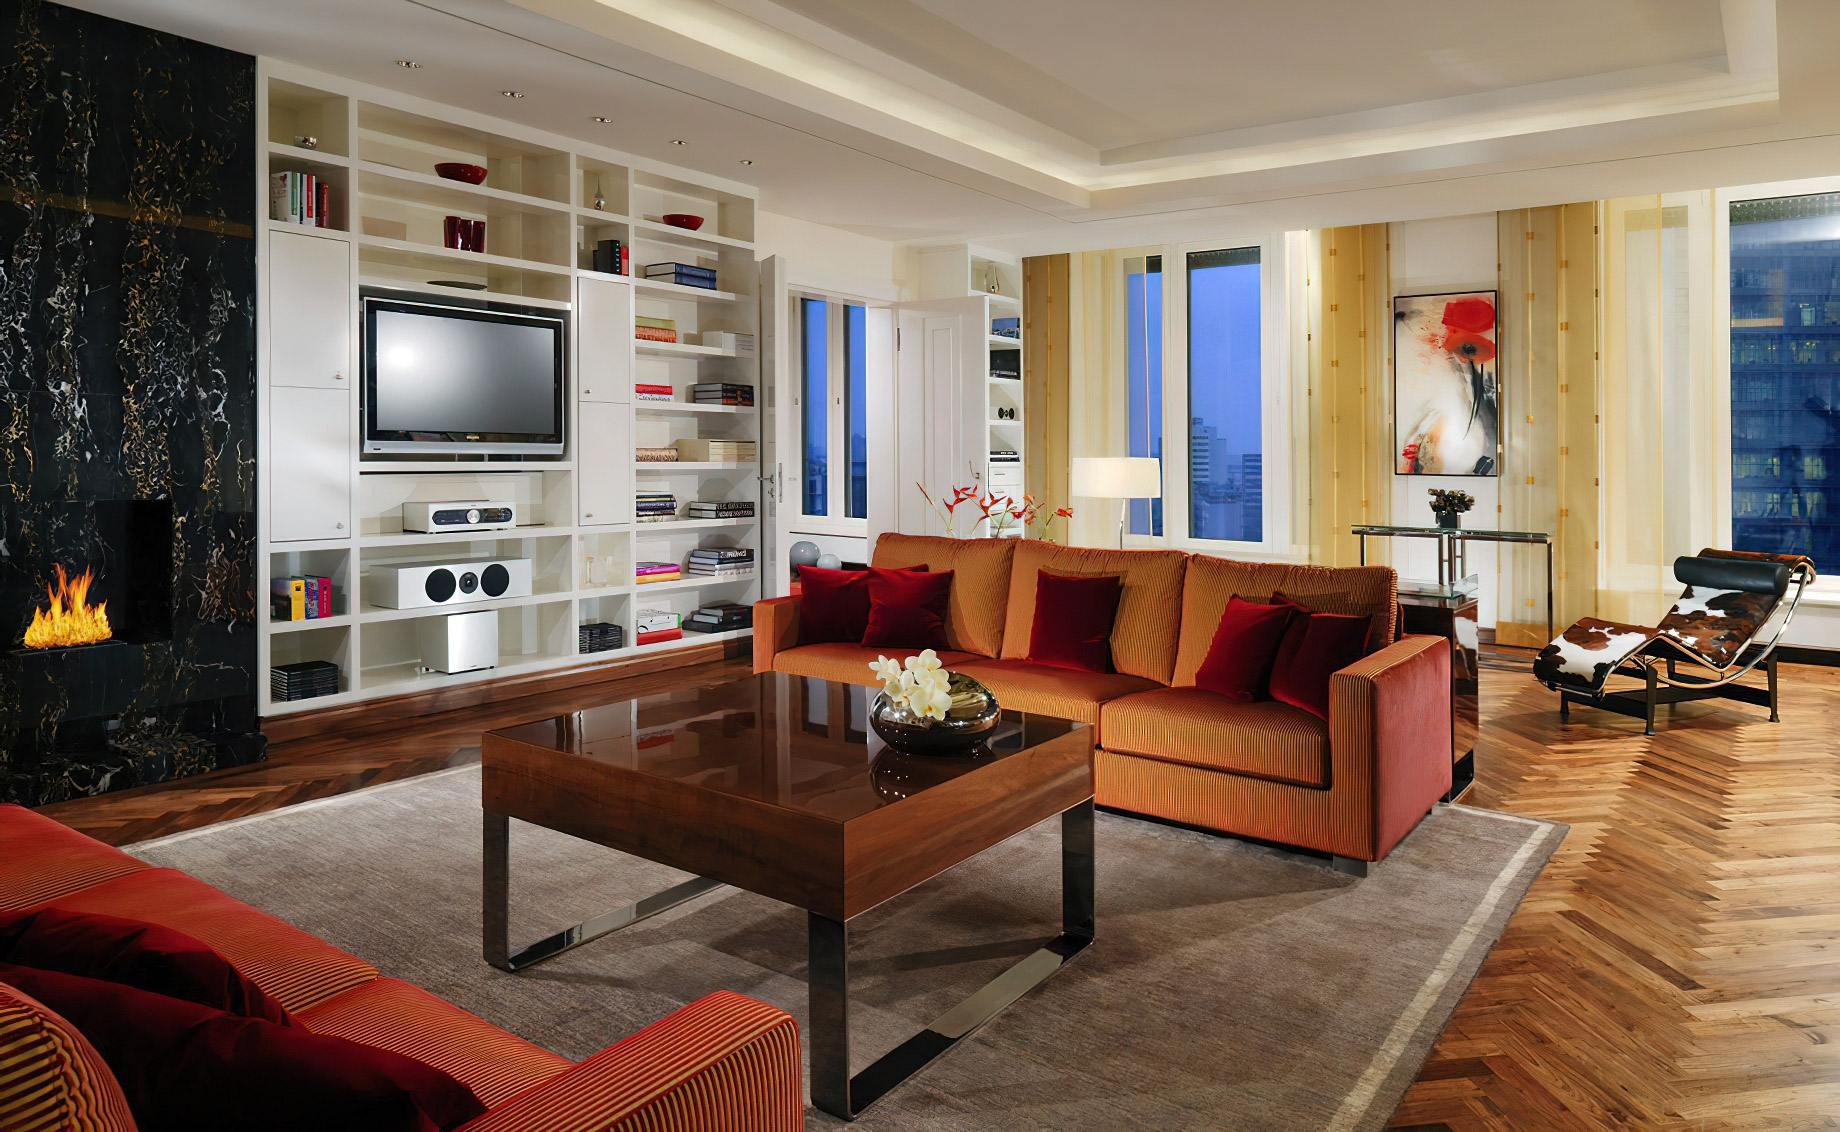 The Ritz-Carlton, Berlin Hotel - Berlin, Germany - The Ritz-Carlton Penthouse Living Room